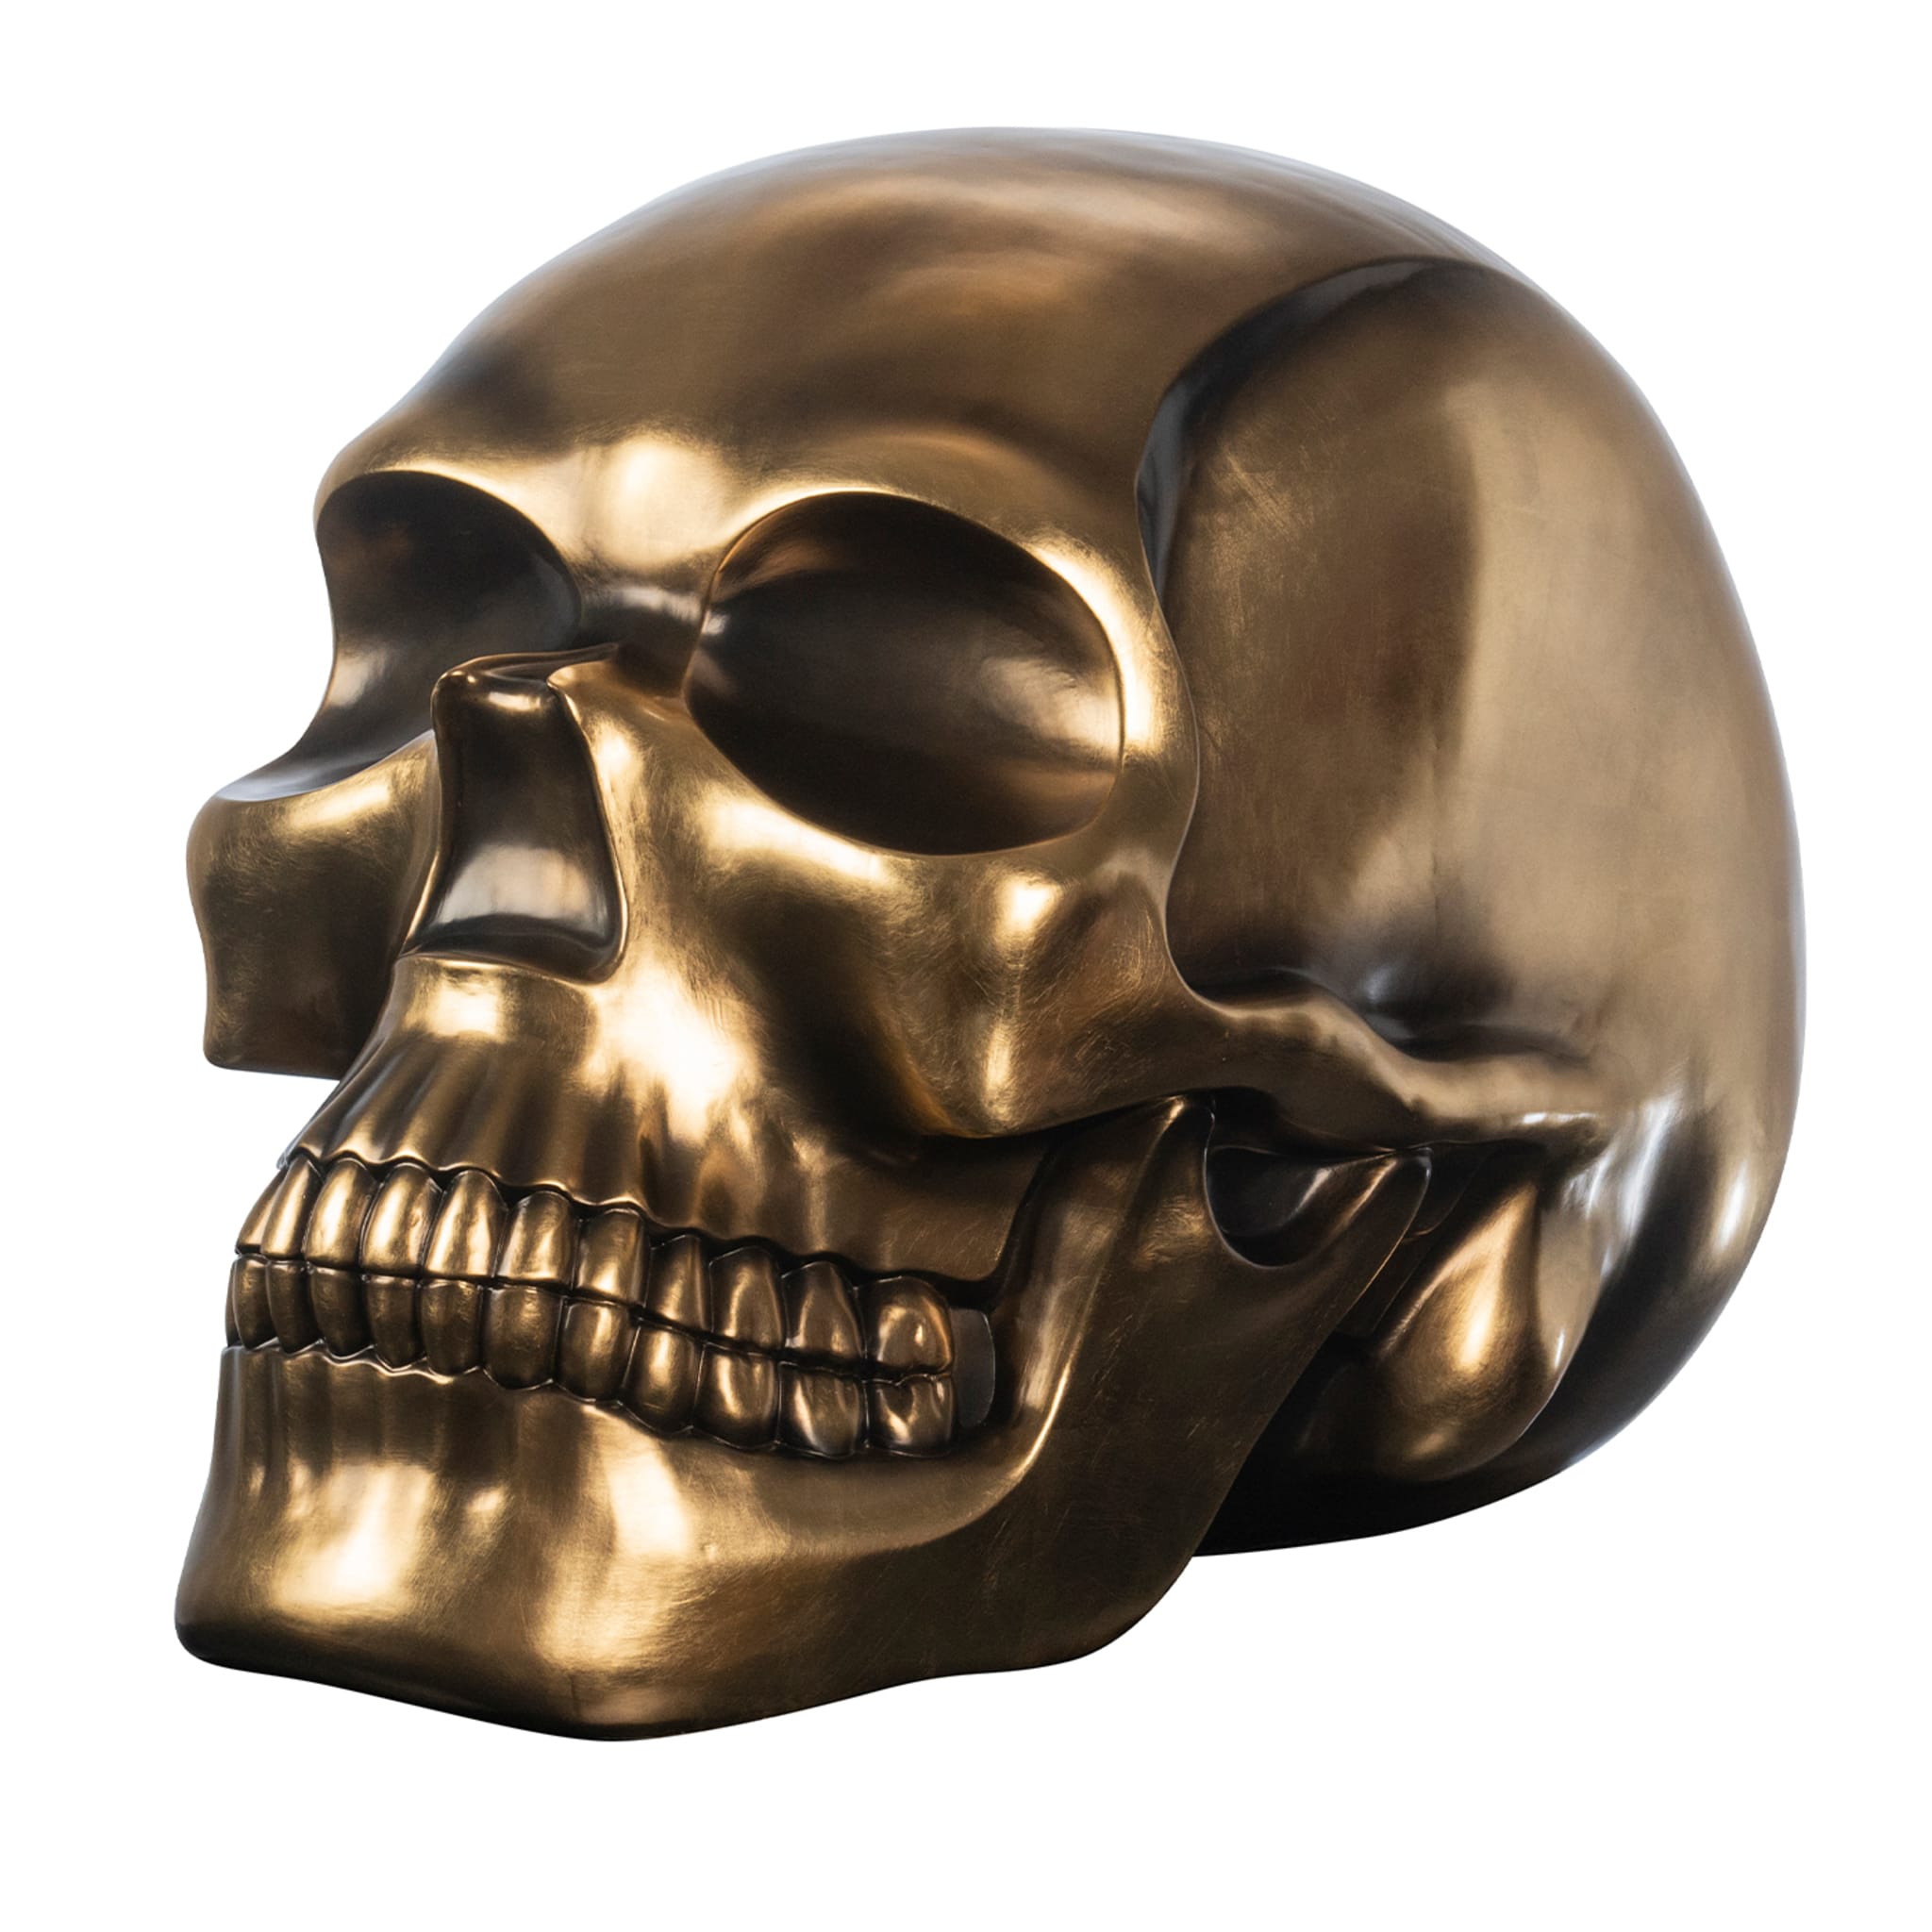 Golden Skull Sculpture - Alternative view 2